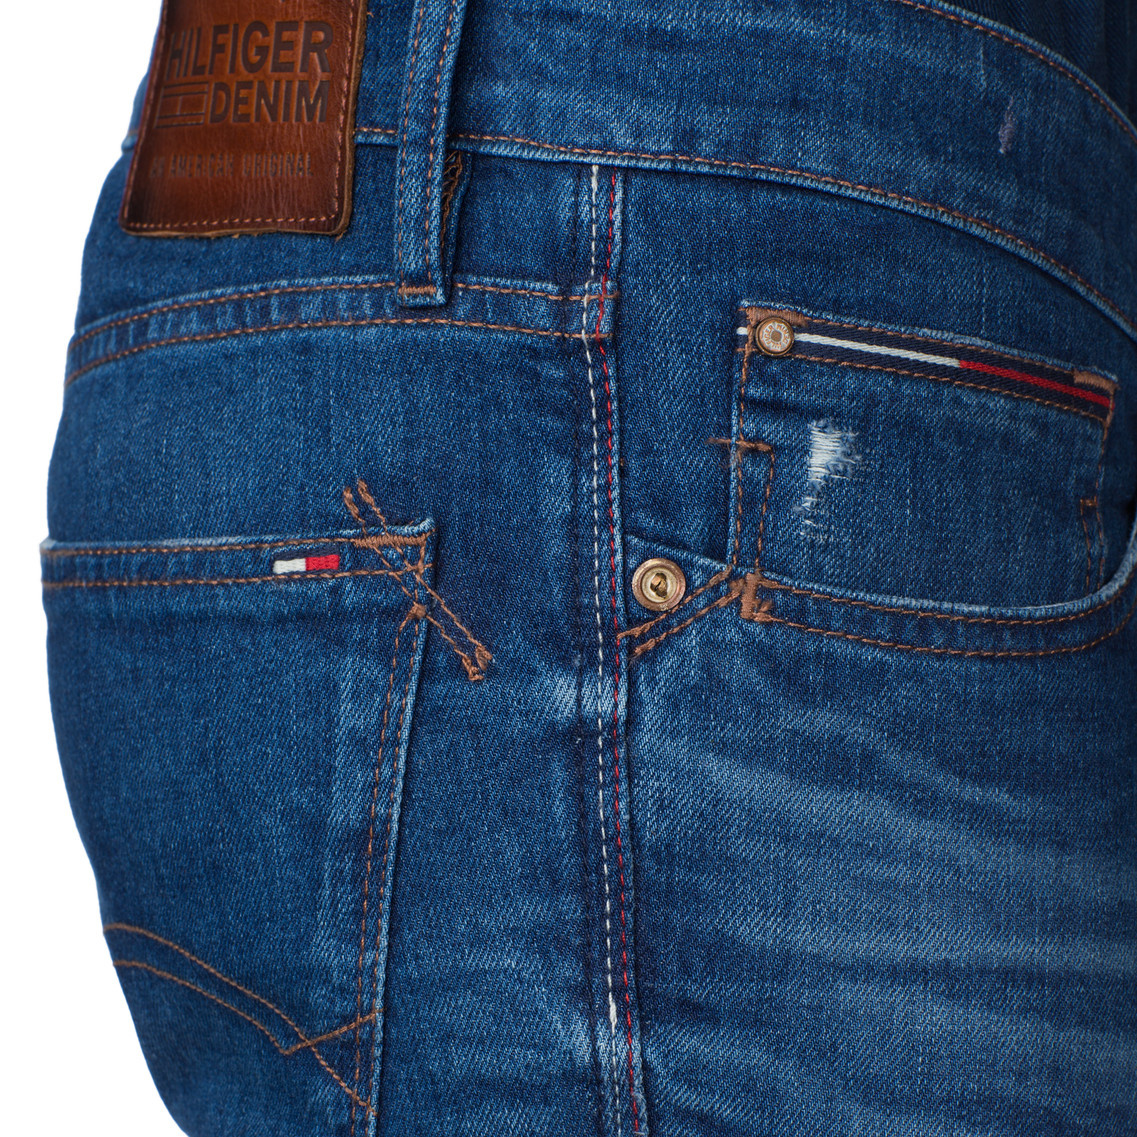 hilfiger ronan jeans off 65% - online 